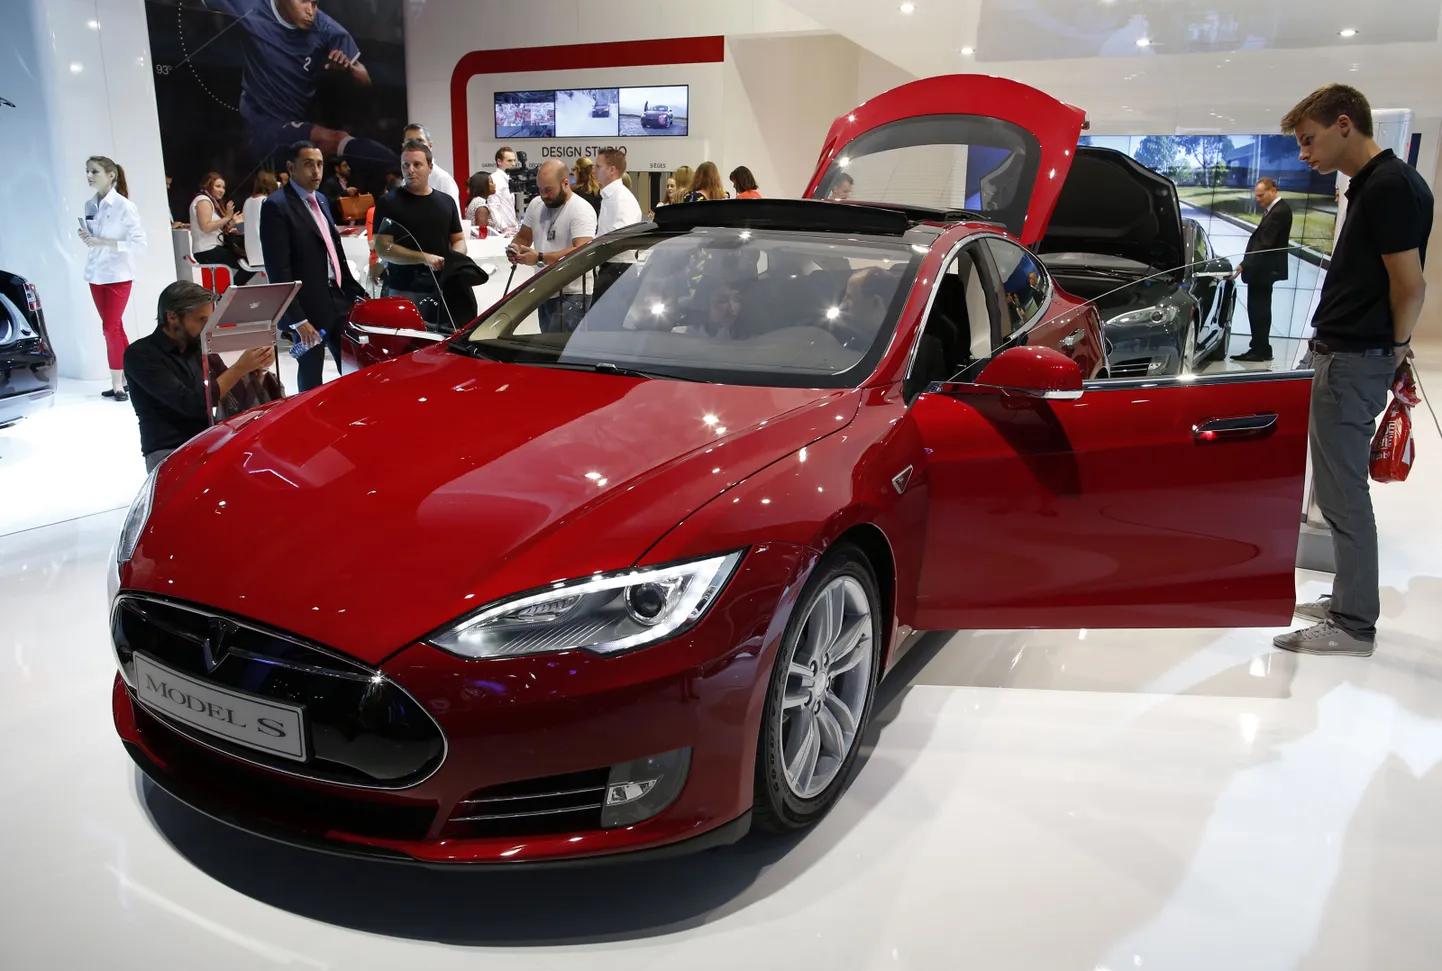 Tesla Model S. Иллюстративное фото.